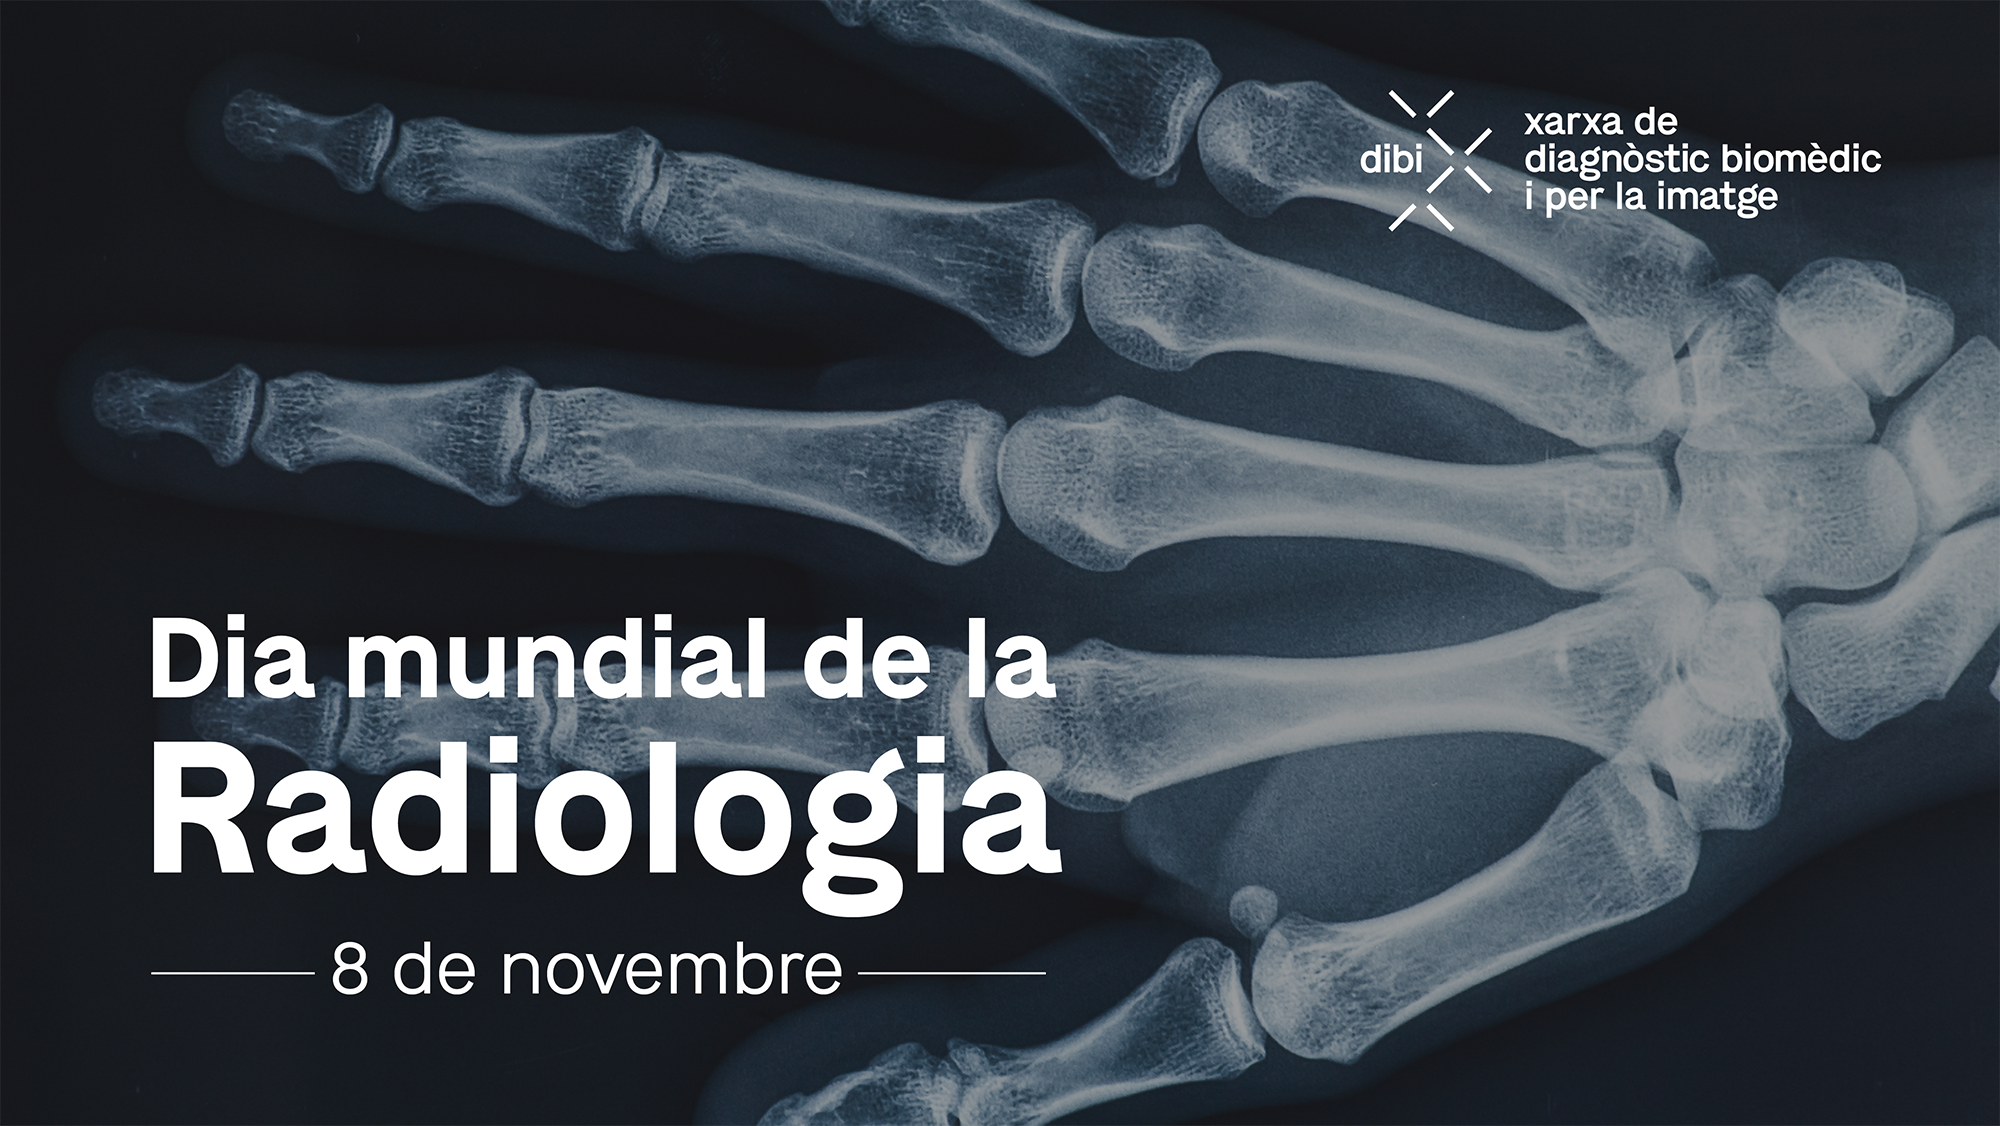 Dia mundial de la Radiologia